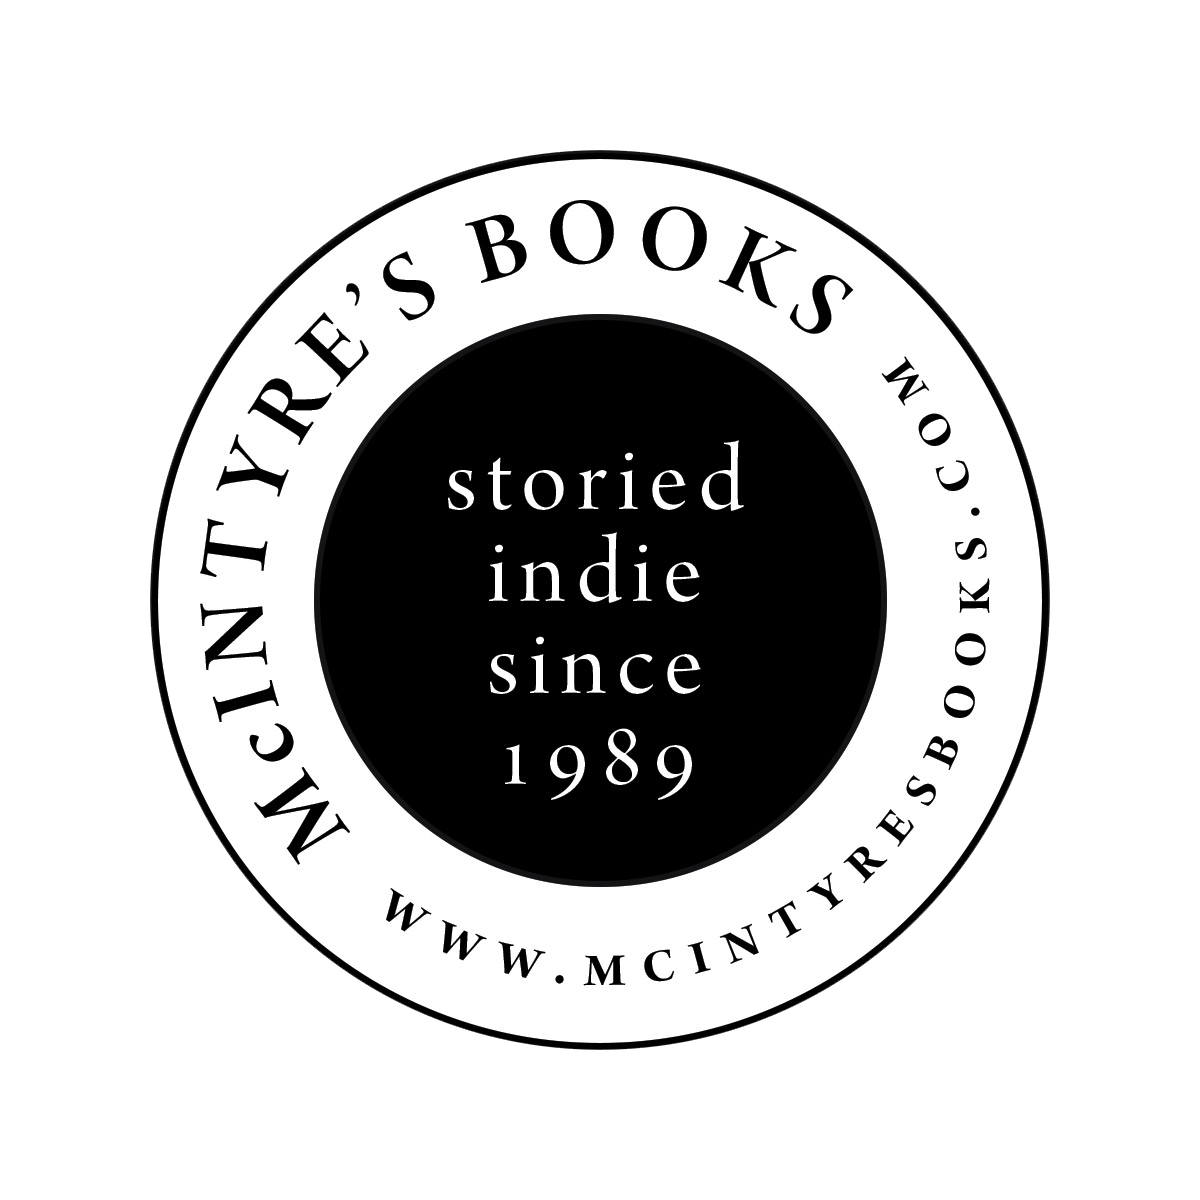 mcintyre's books www.mcontyresbooks.com storied indie since 1989